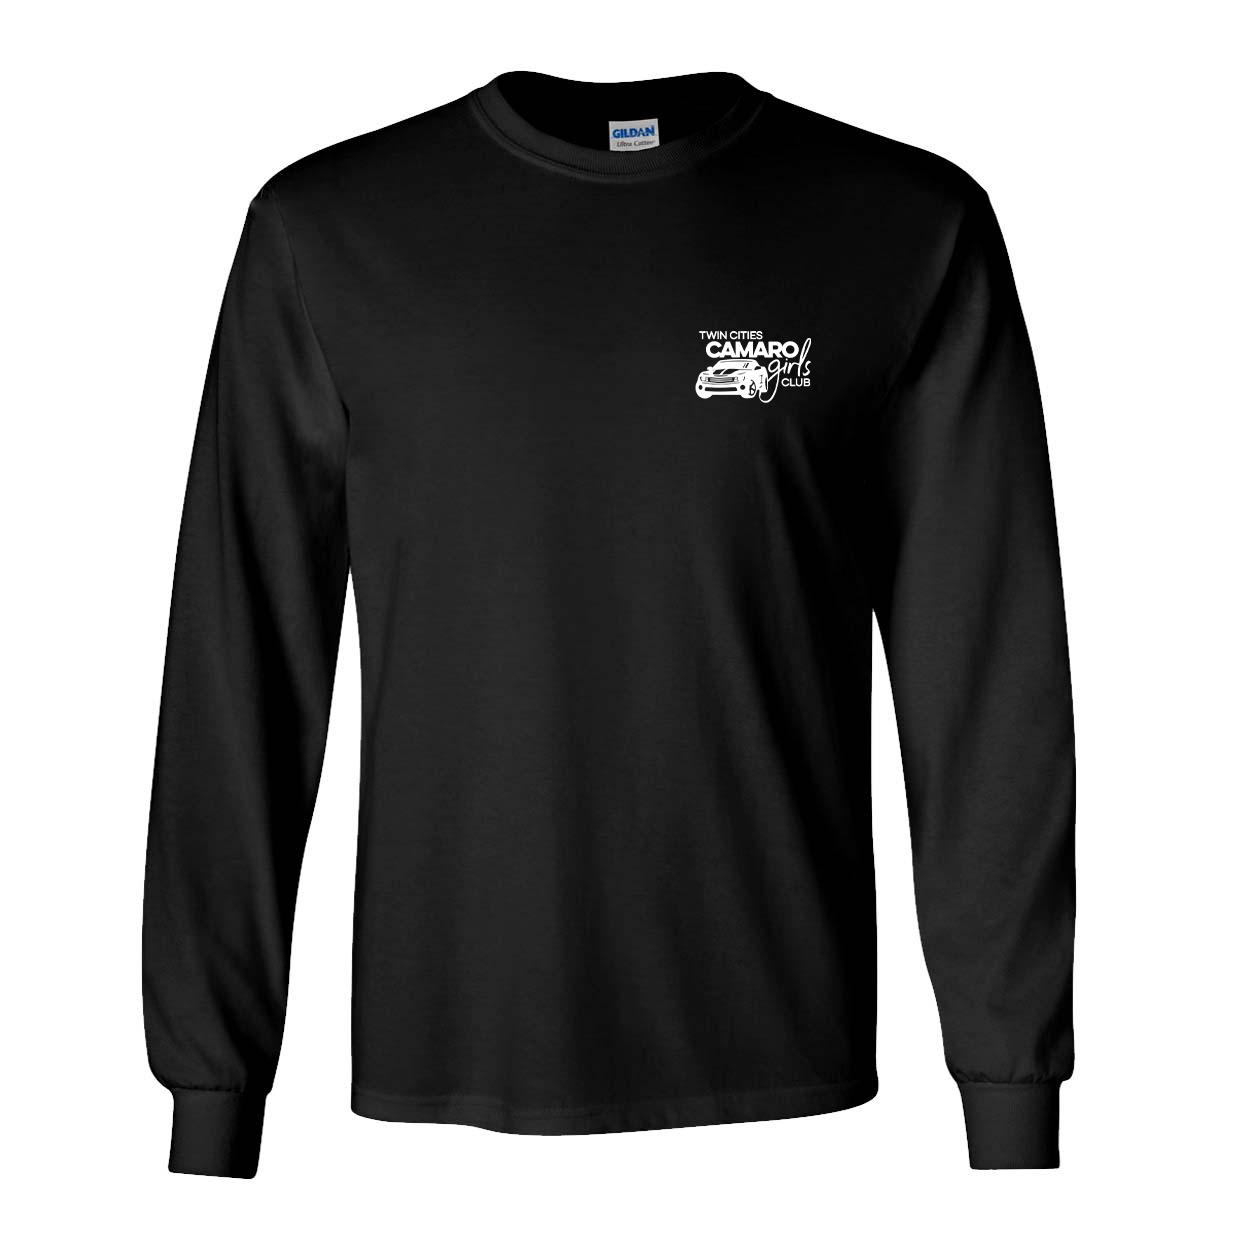 Twin Cities Camaro Girls Club Night Out Long Sleeve T-Shirt Black (White Logo)